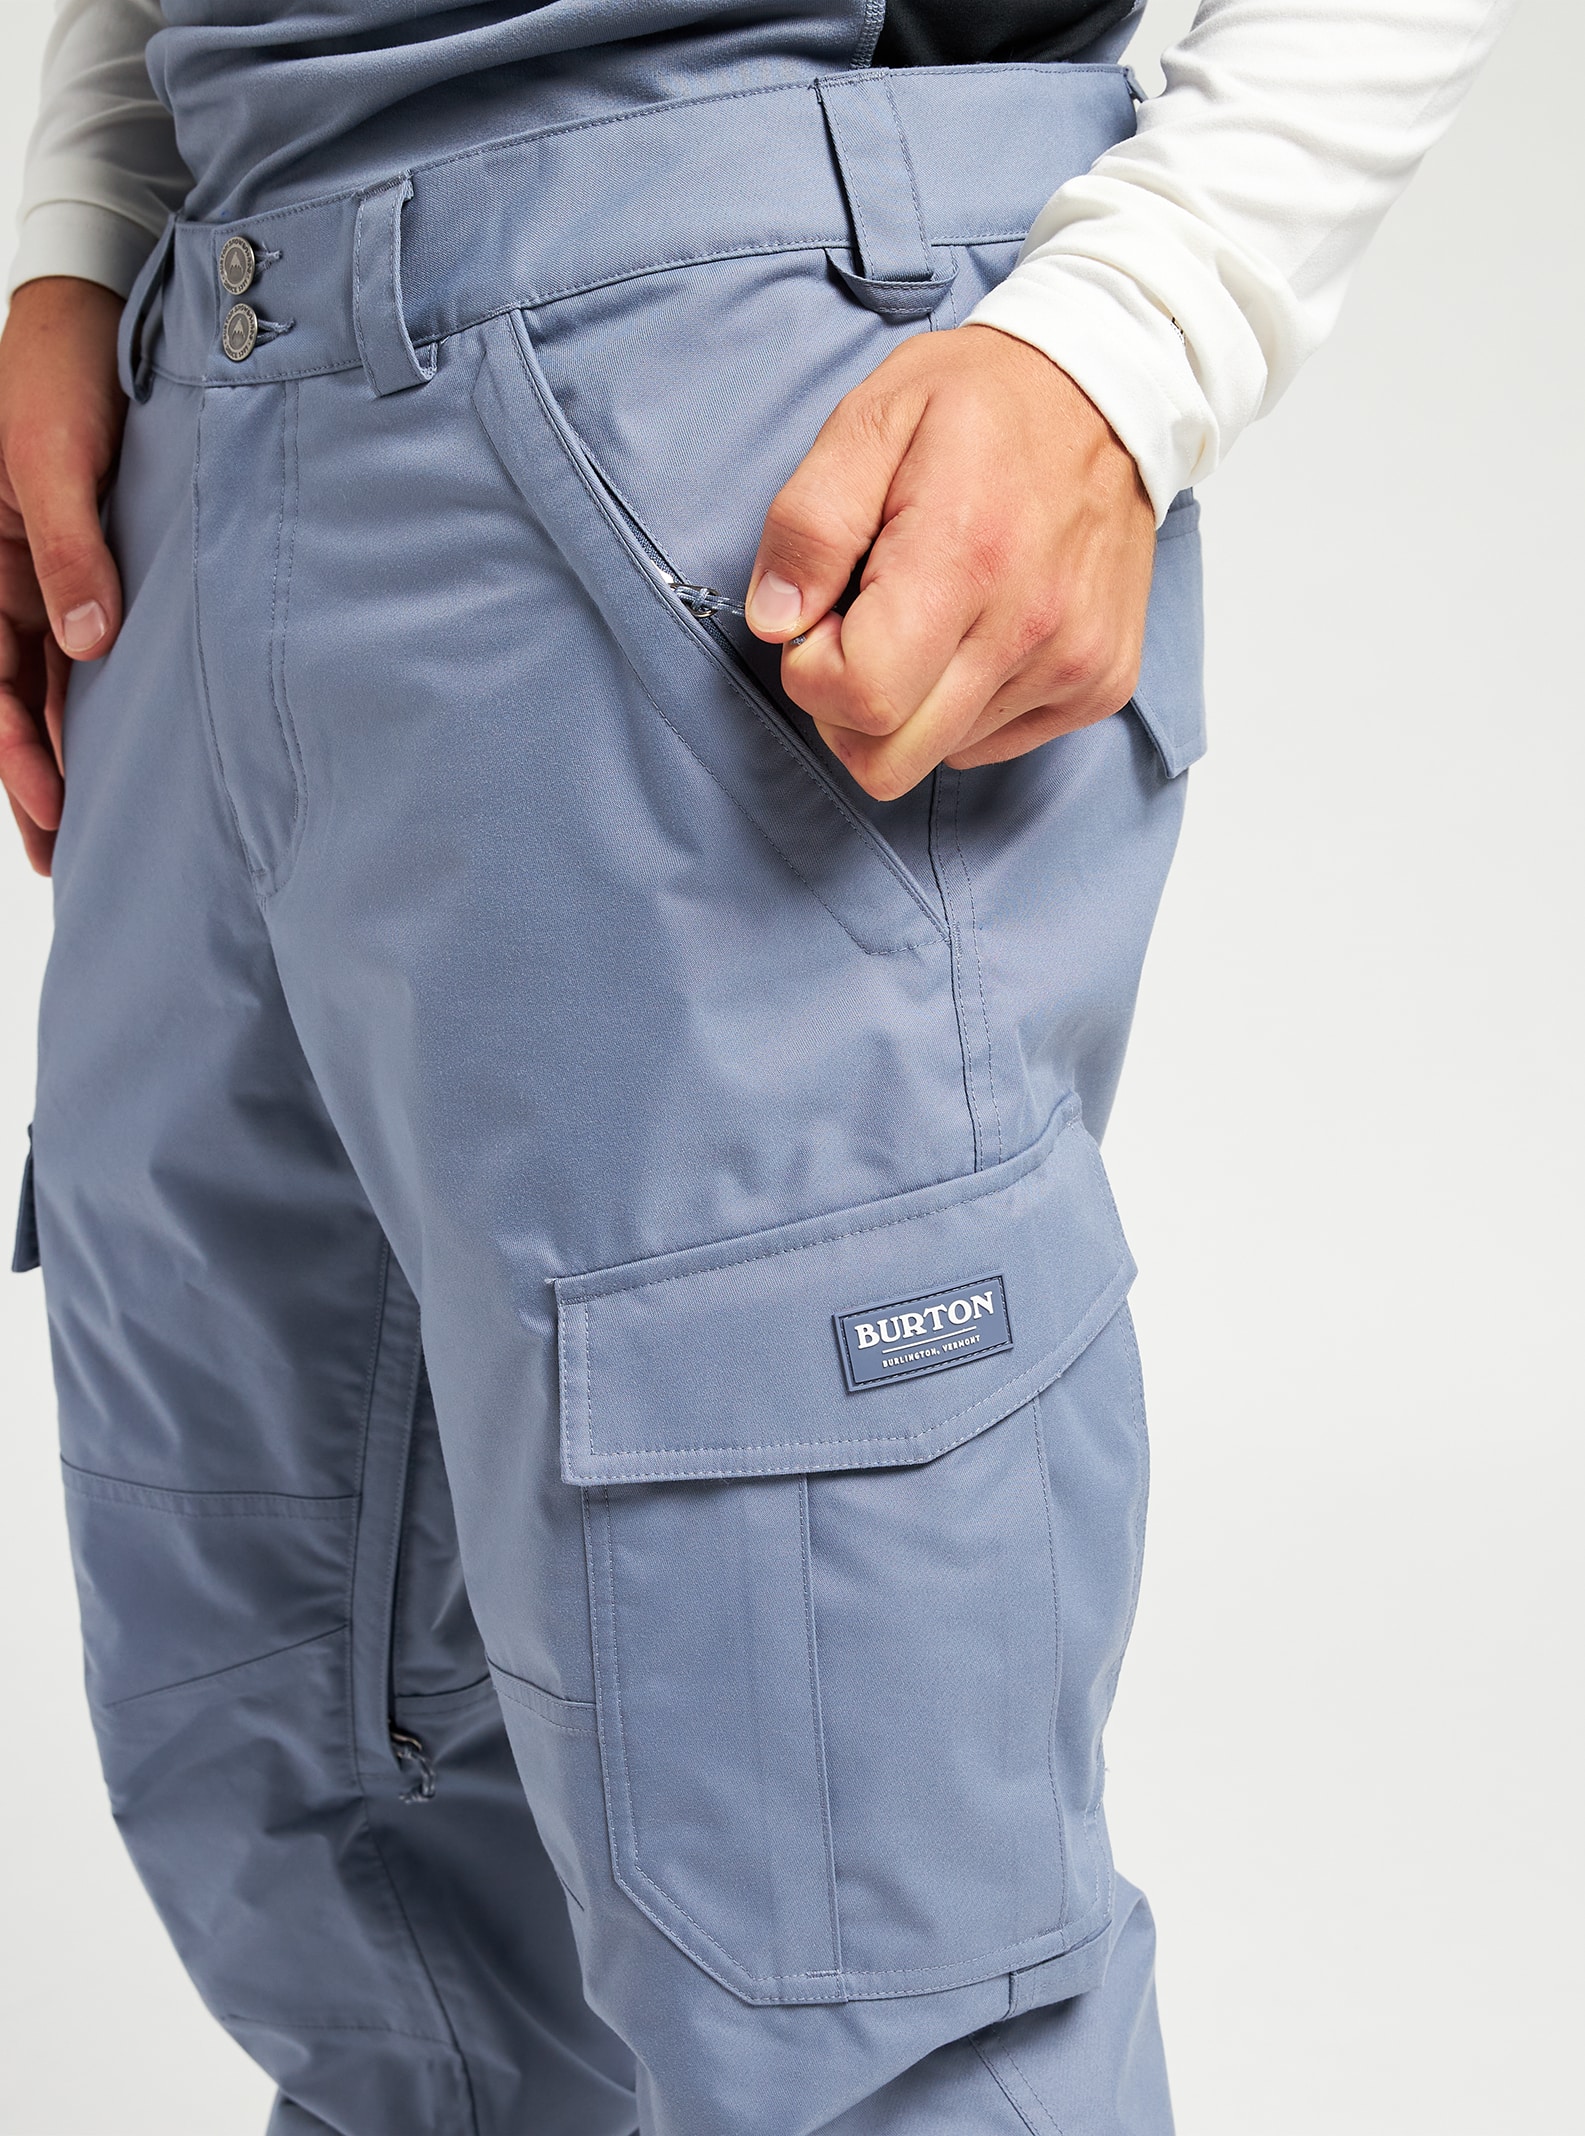 Burton Cargo Pantalon de Snowboard, Hombre, Dress Blue, XS